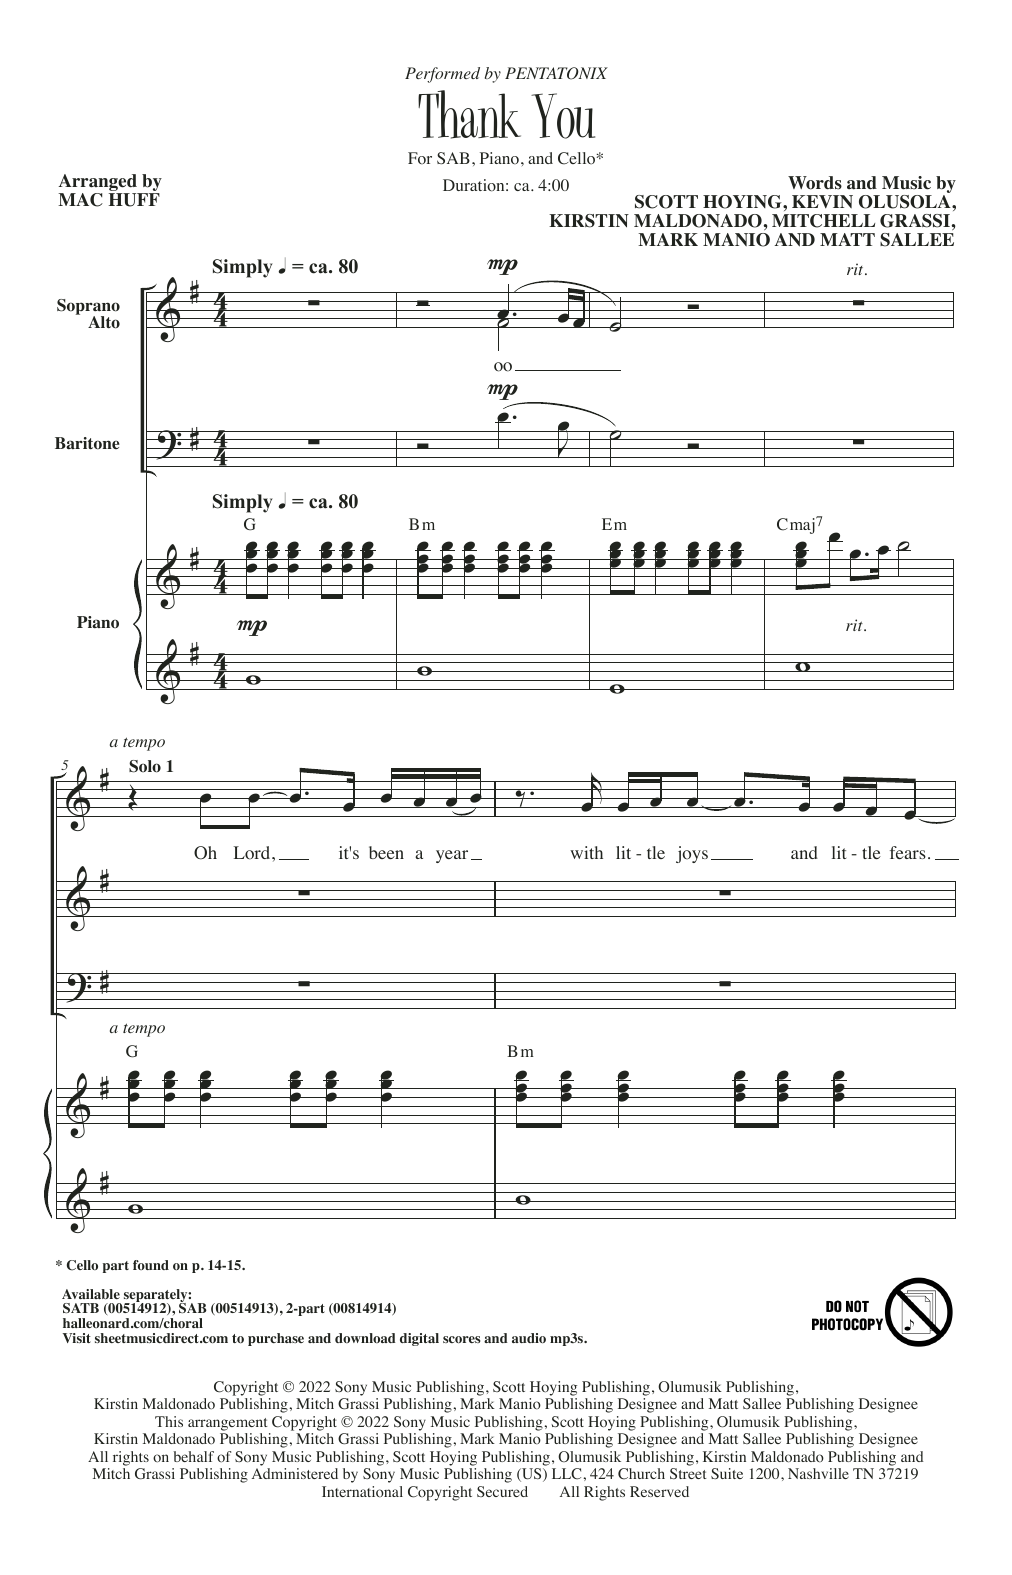 Pentatonix Thank You (arr. Mac Huff) Sheet Music Notes & Chords for 2-Part Choir - Download or Print PDF